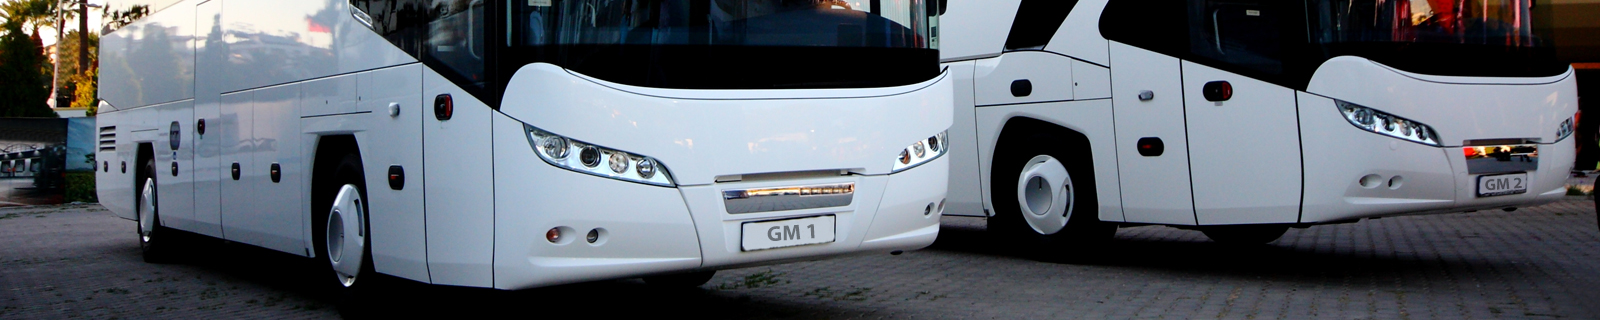 club travel minibuses